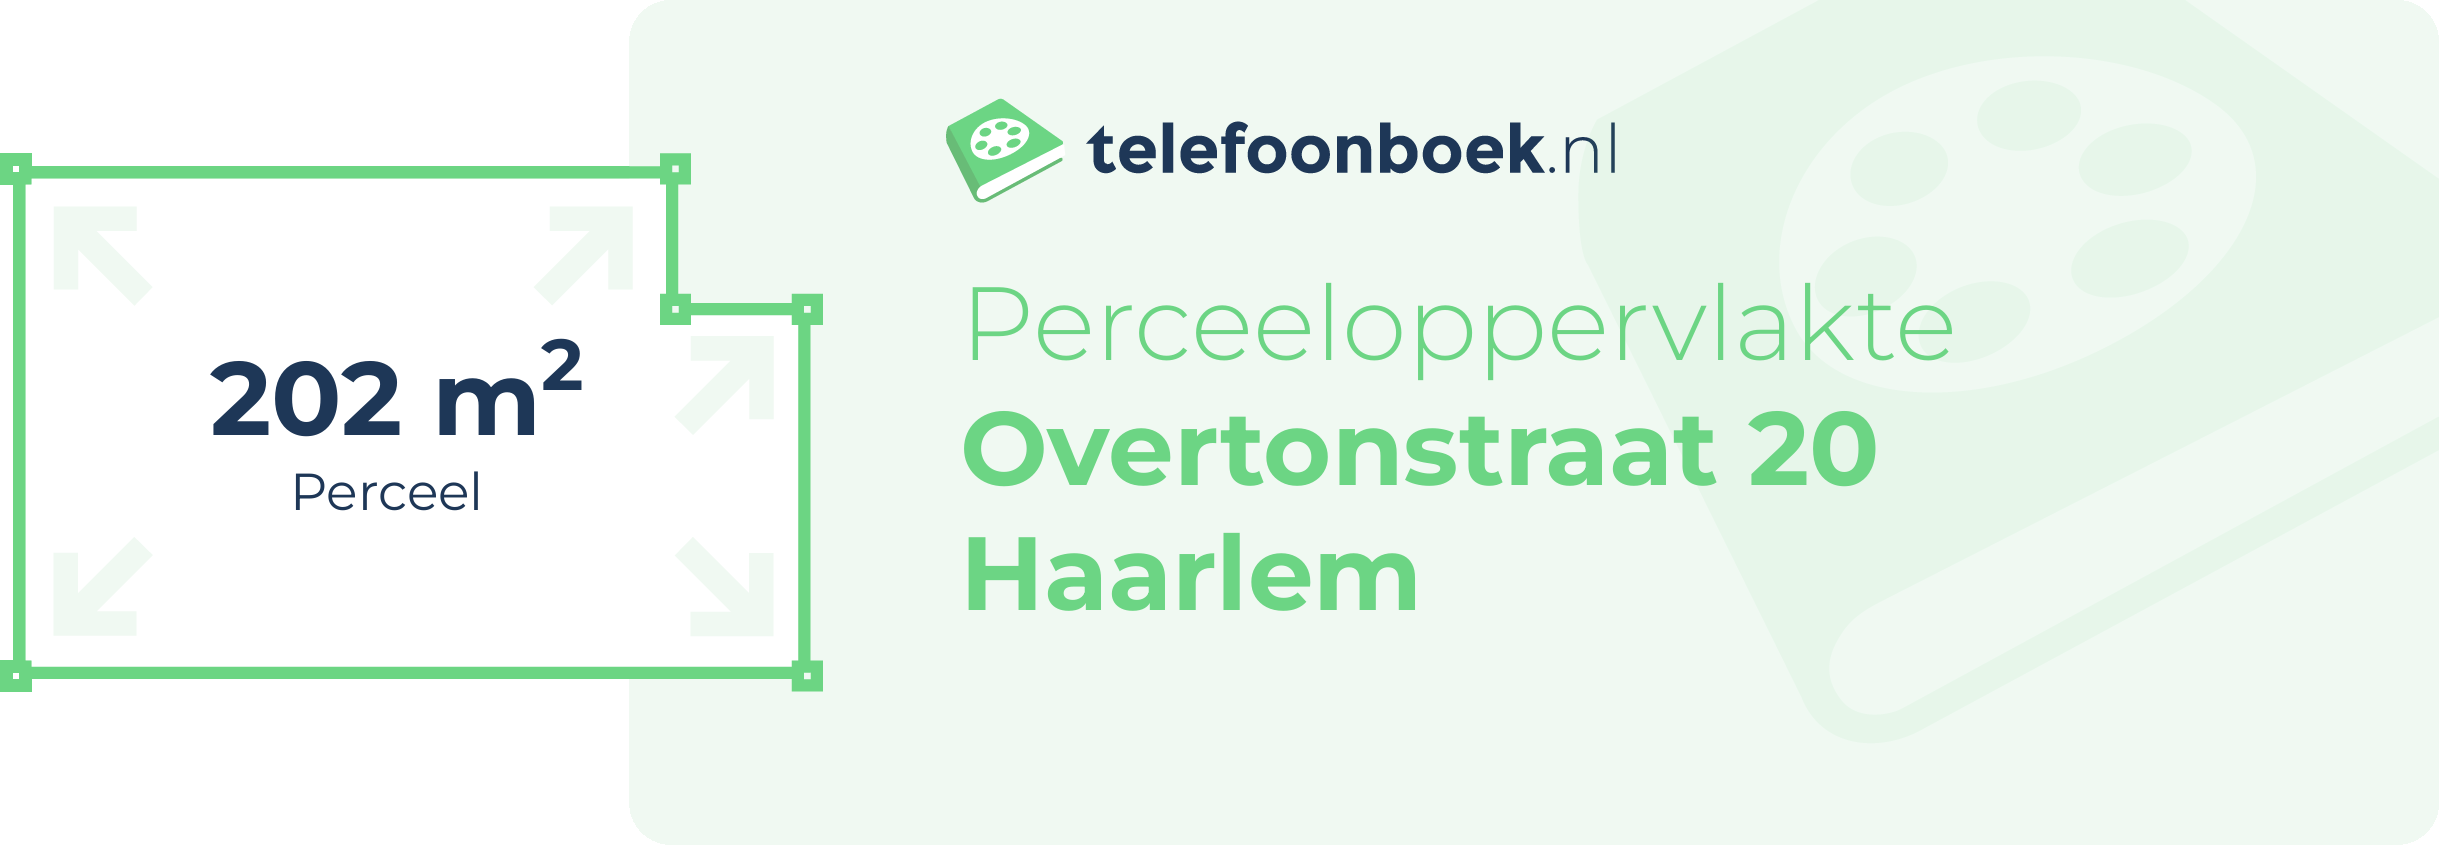 Perceeloppervlakte Overtonstraat 20 Haarlem